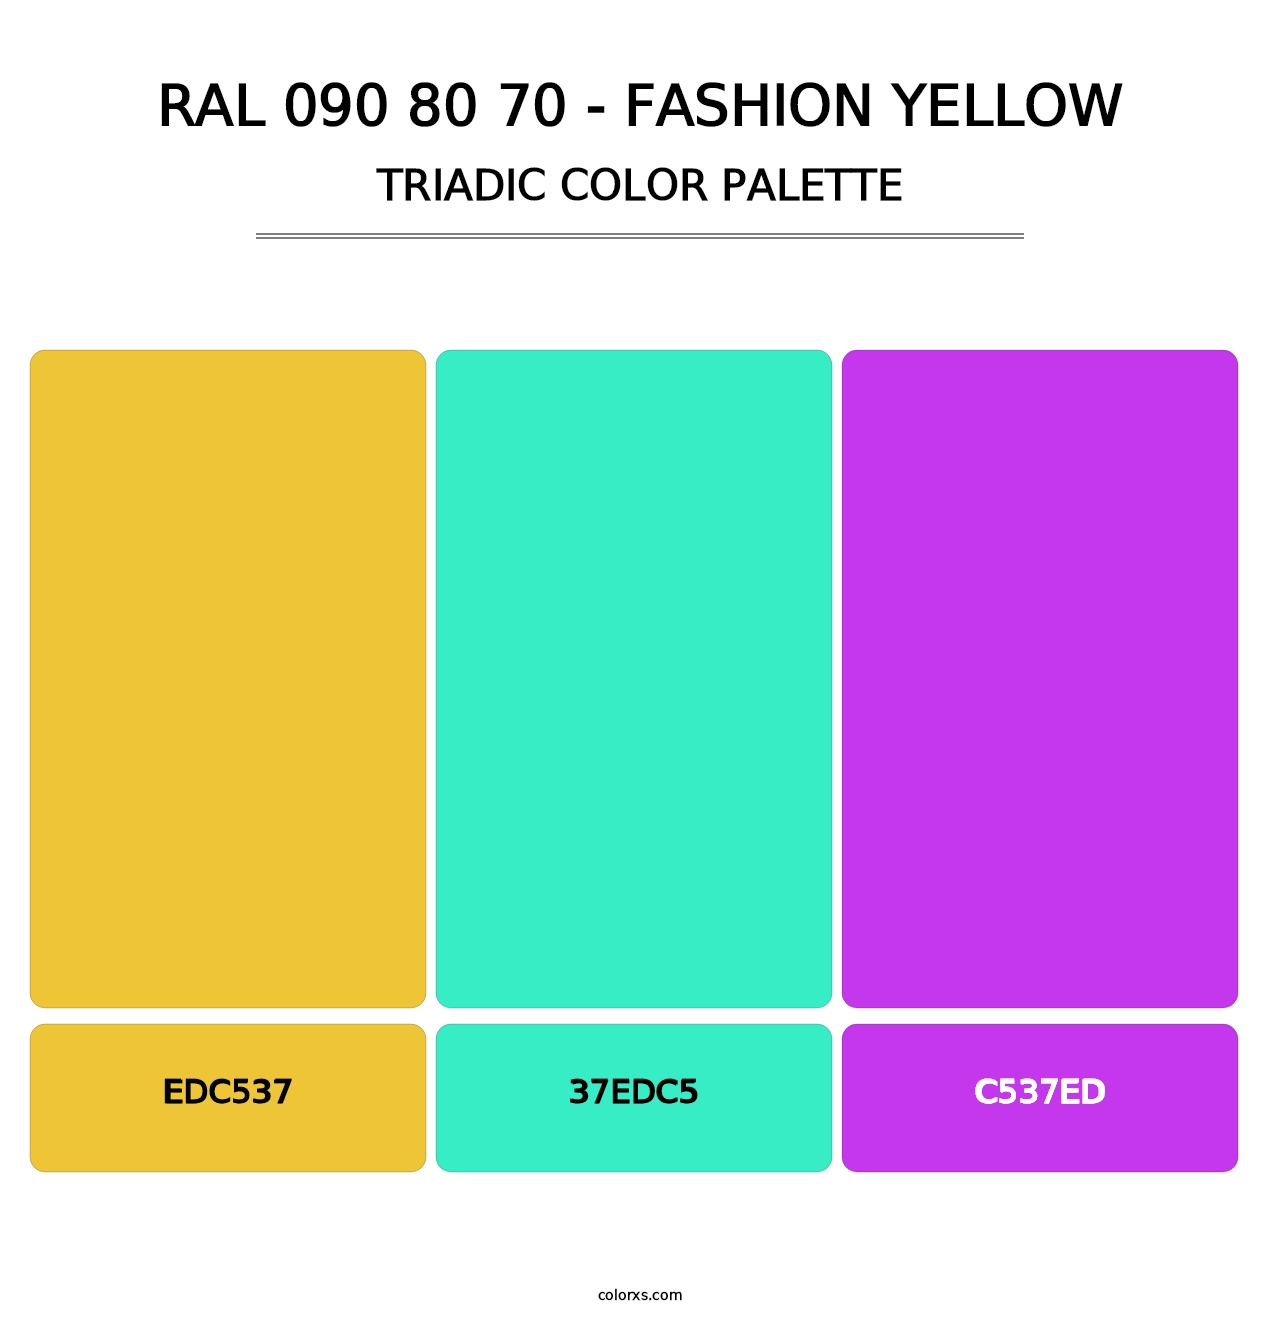 RAL 090 80 70 - Fashion Yellow - Triadic Color Palette